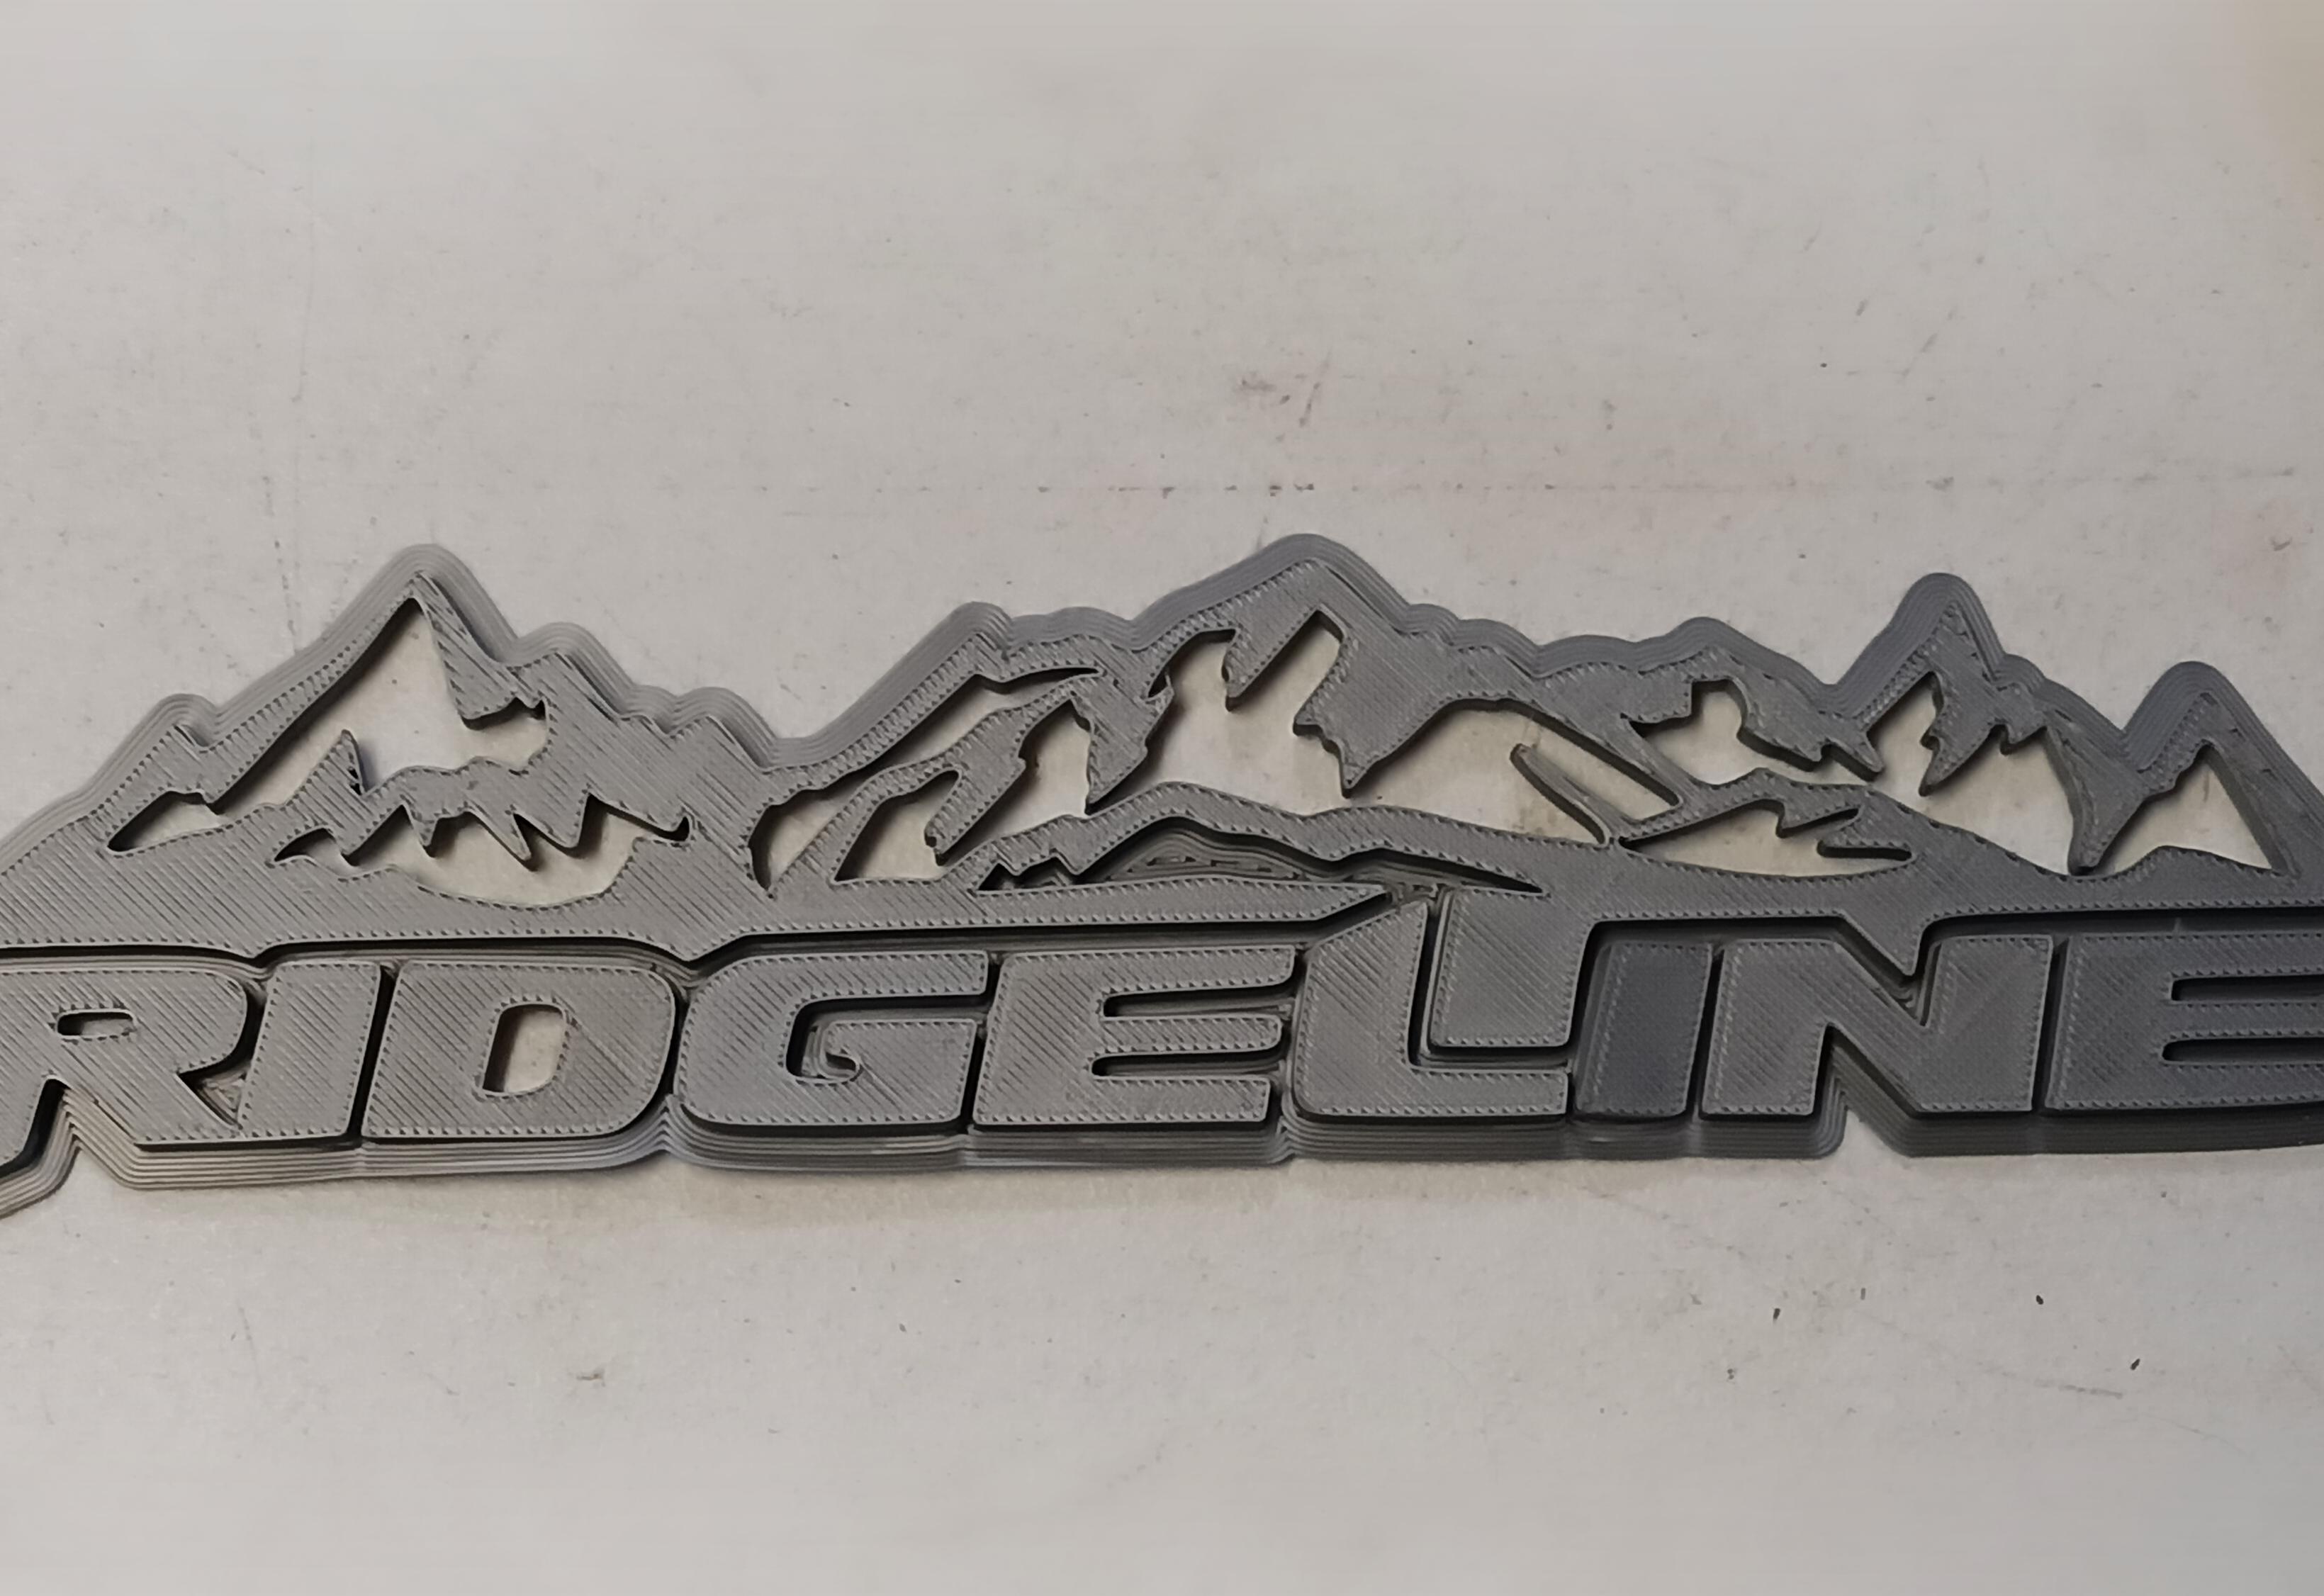 Ridgeline Badge with mountain peaks above emblem 3d model